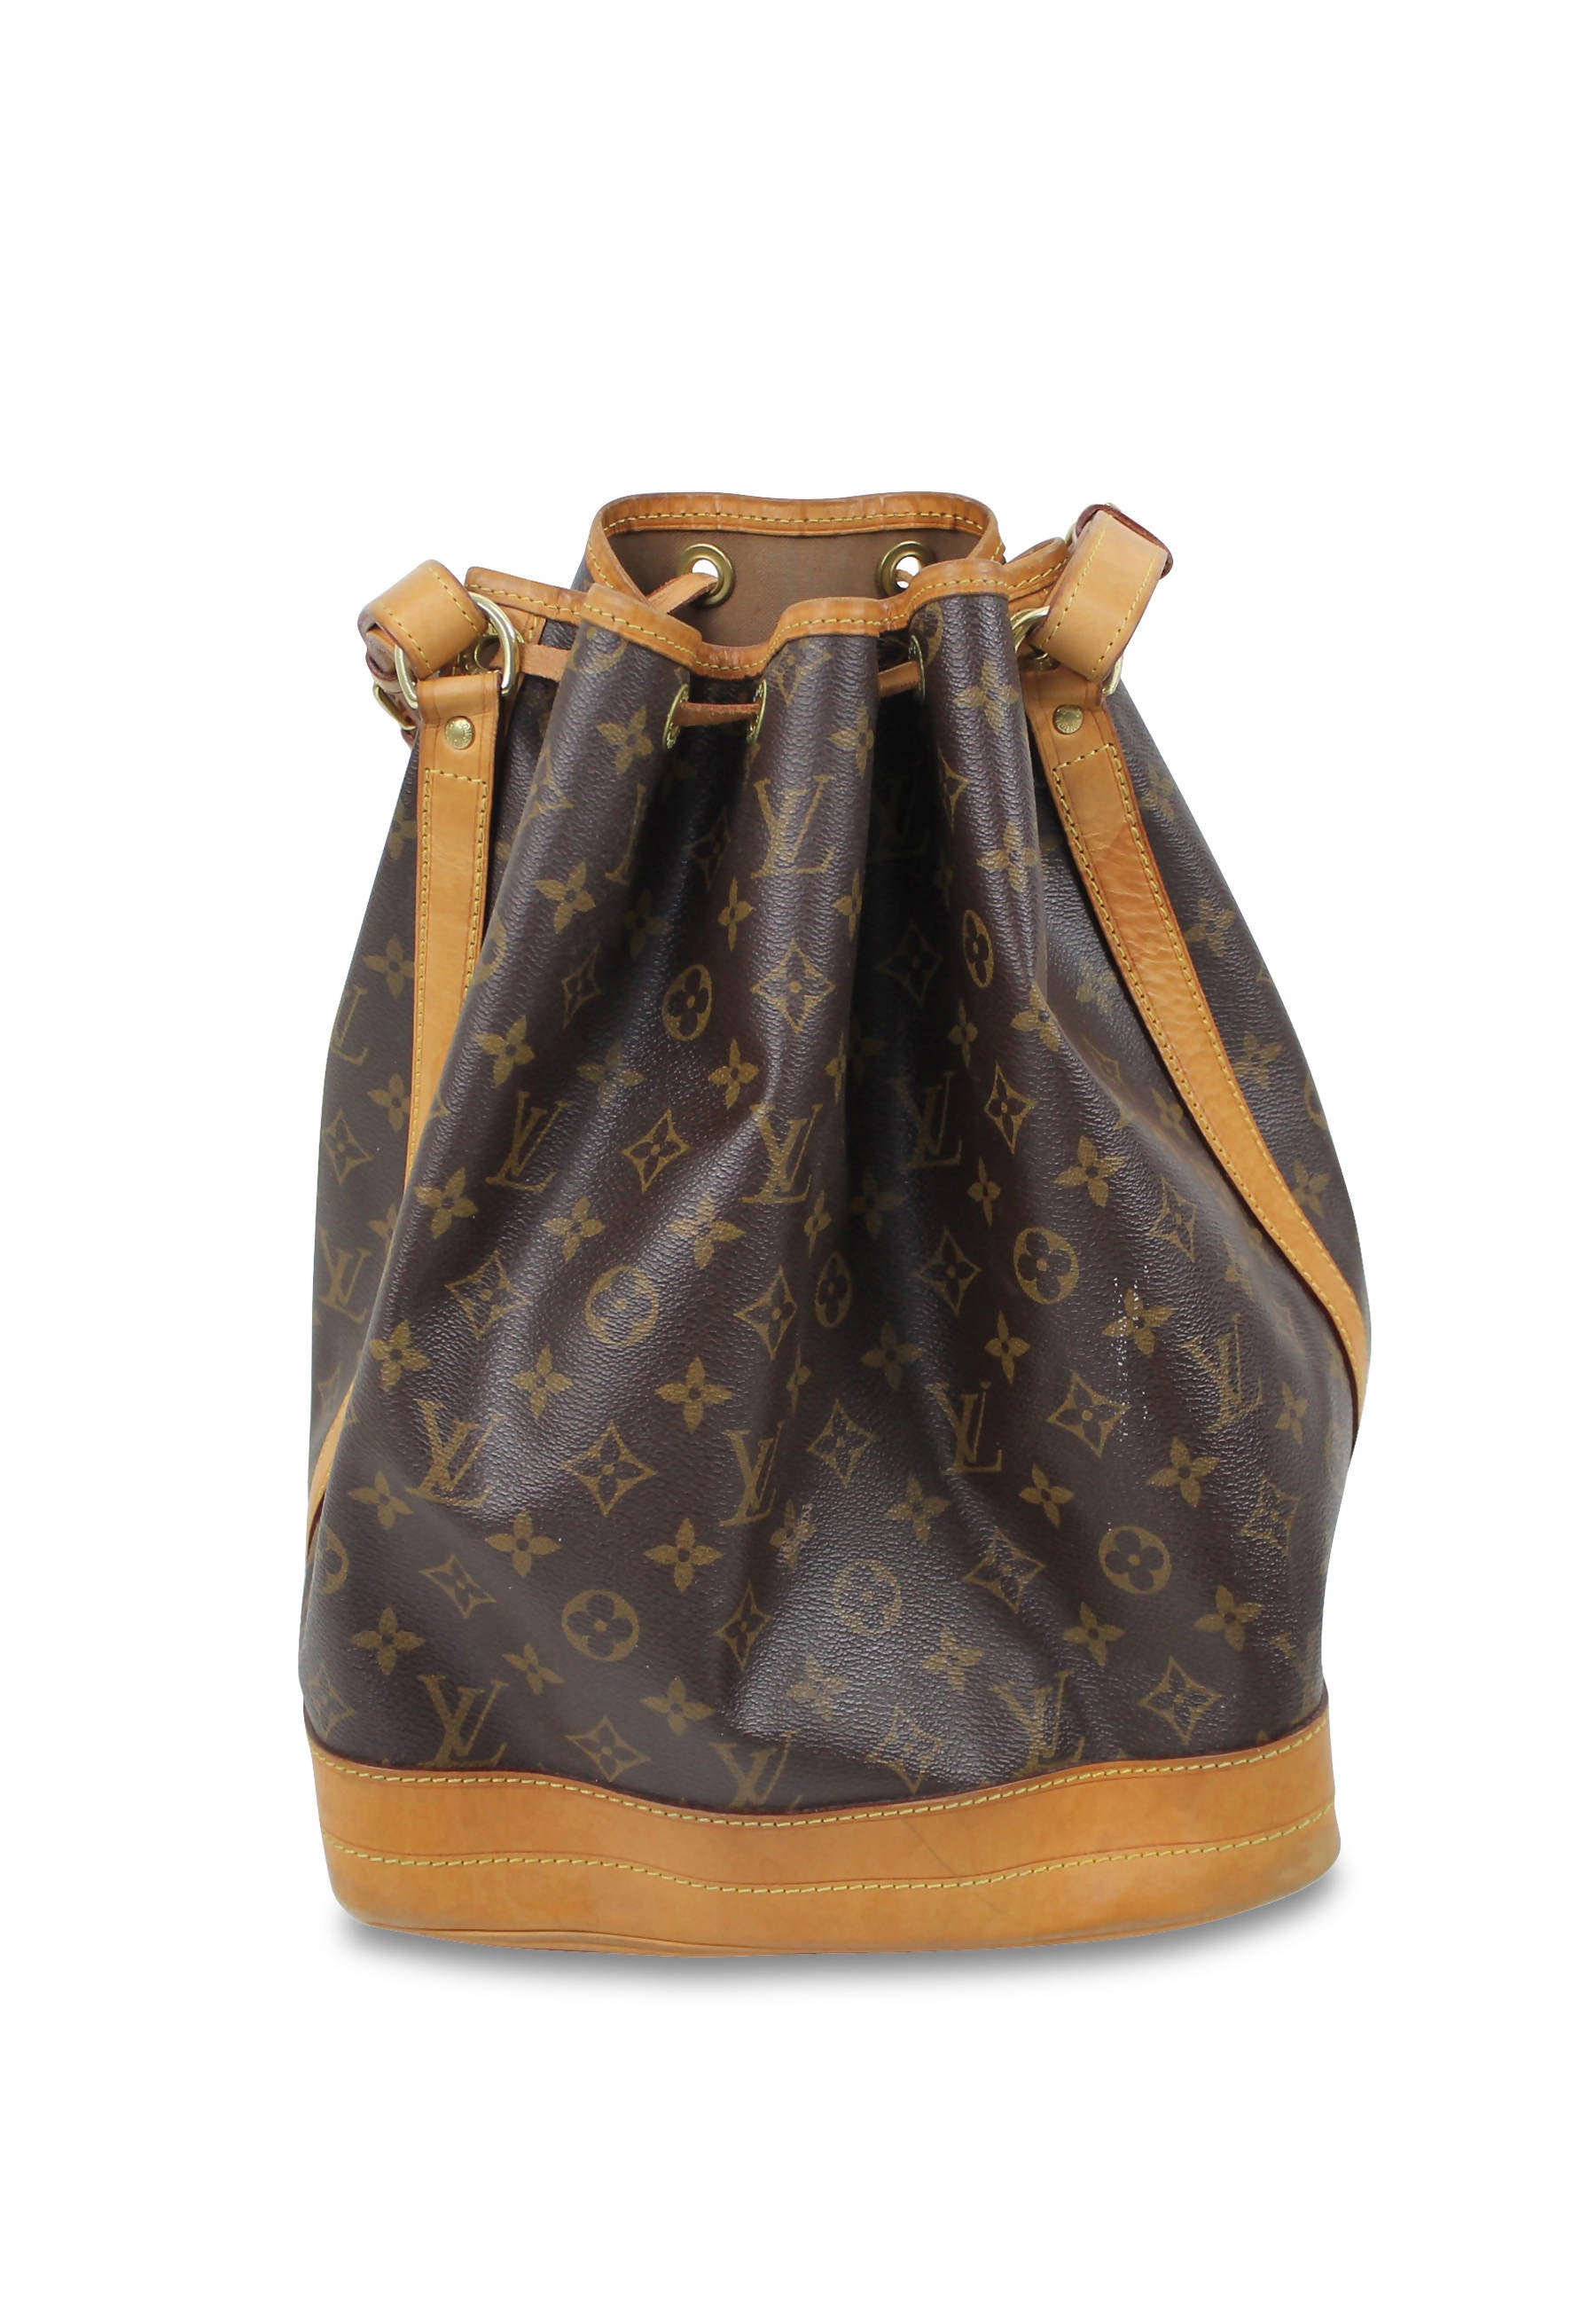 Borse a secchiello ora più che mai  TheFashiondiet  Louis vuitton  handbags outlet Fashion bags Bags